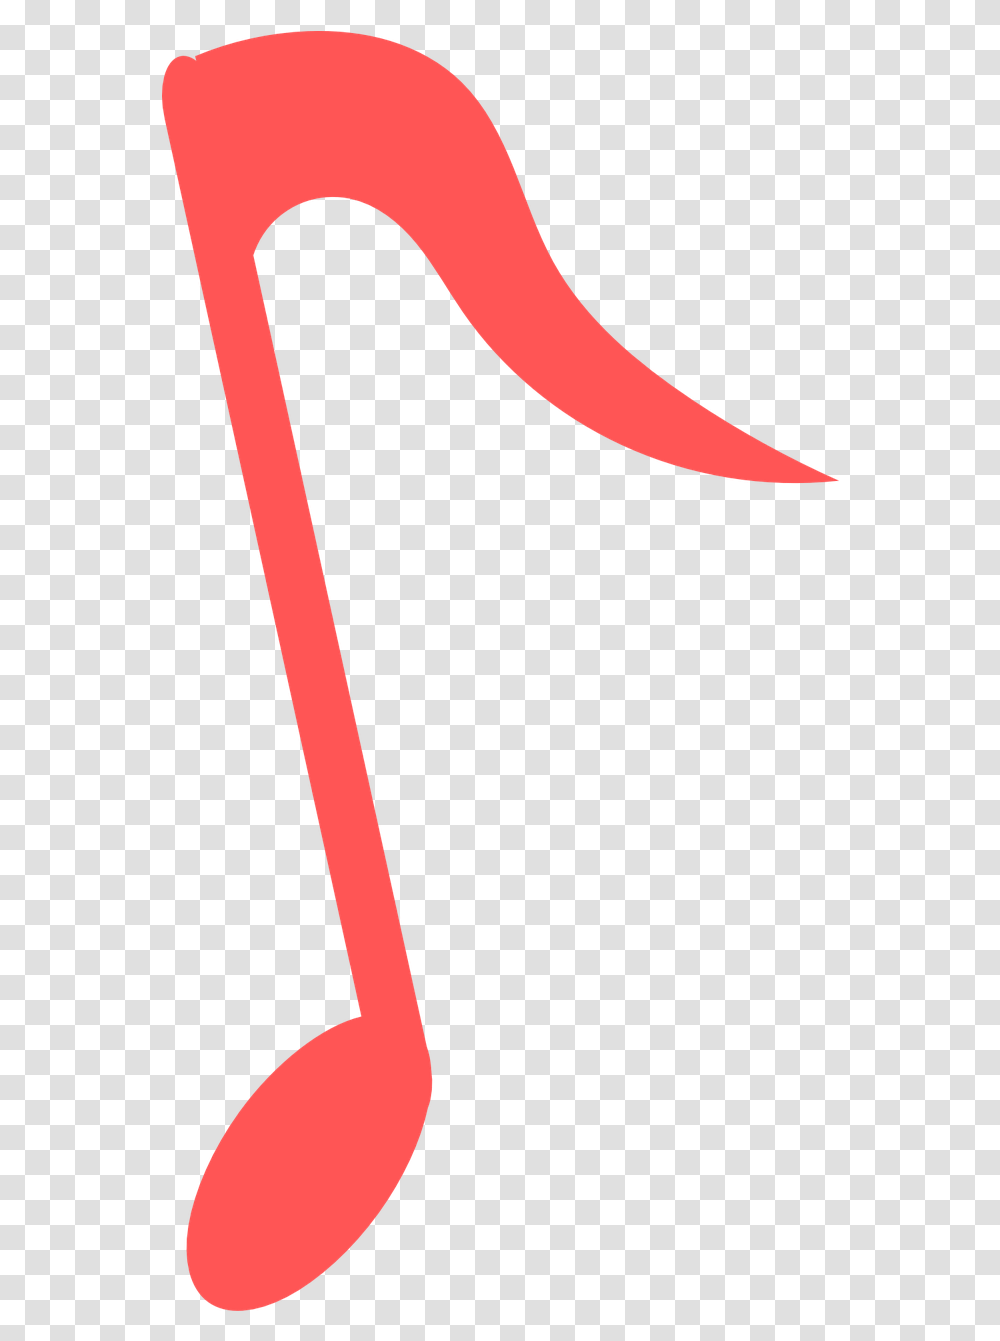 Download Music Symbol Notation Musical Image Simbolo Simbolos De Musica, Weapon, Weaponry, Emblem, Spear Transparent Png